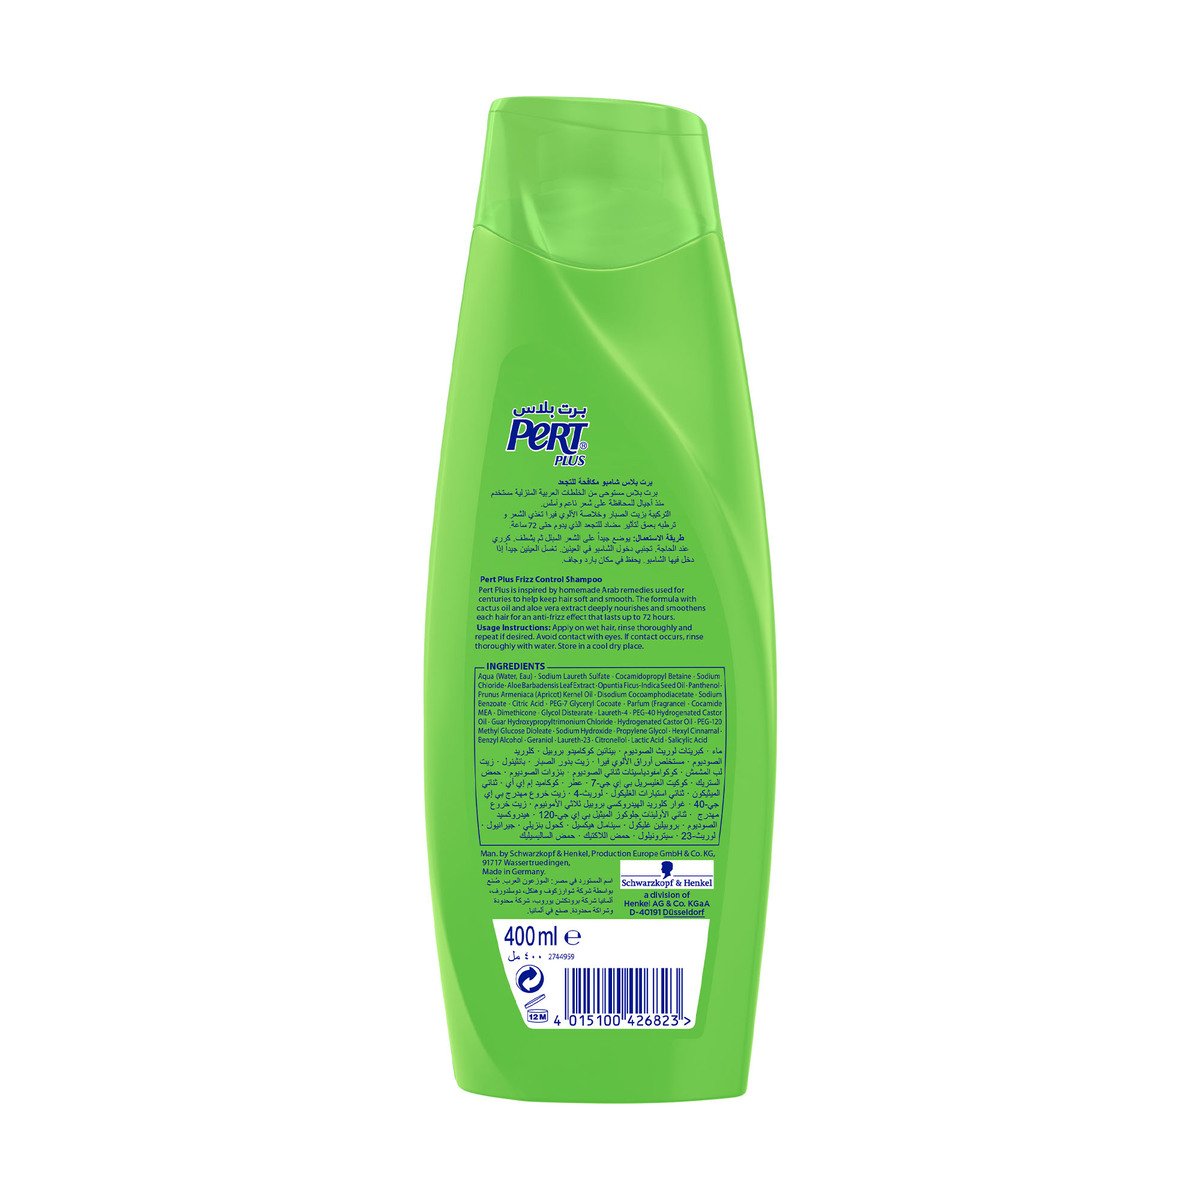 Pert Plus Frizz Control Shampoo with Cactus & Aloe Vera Extract 400 ml